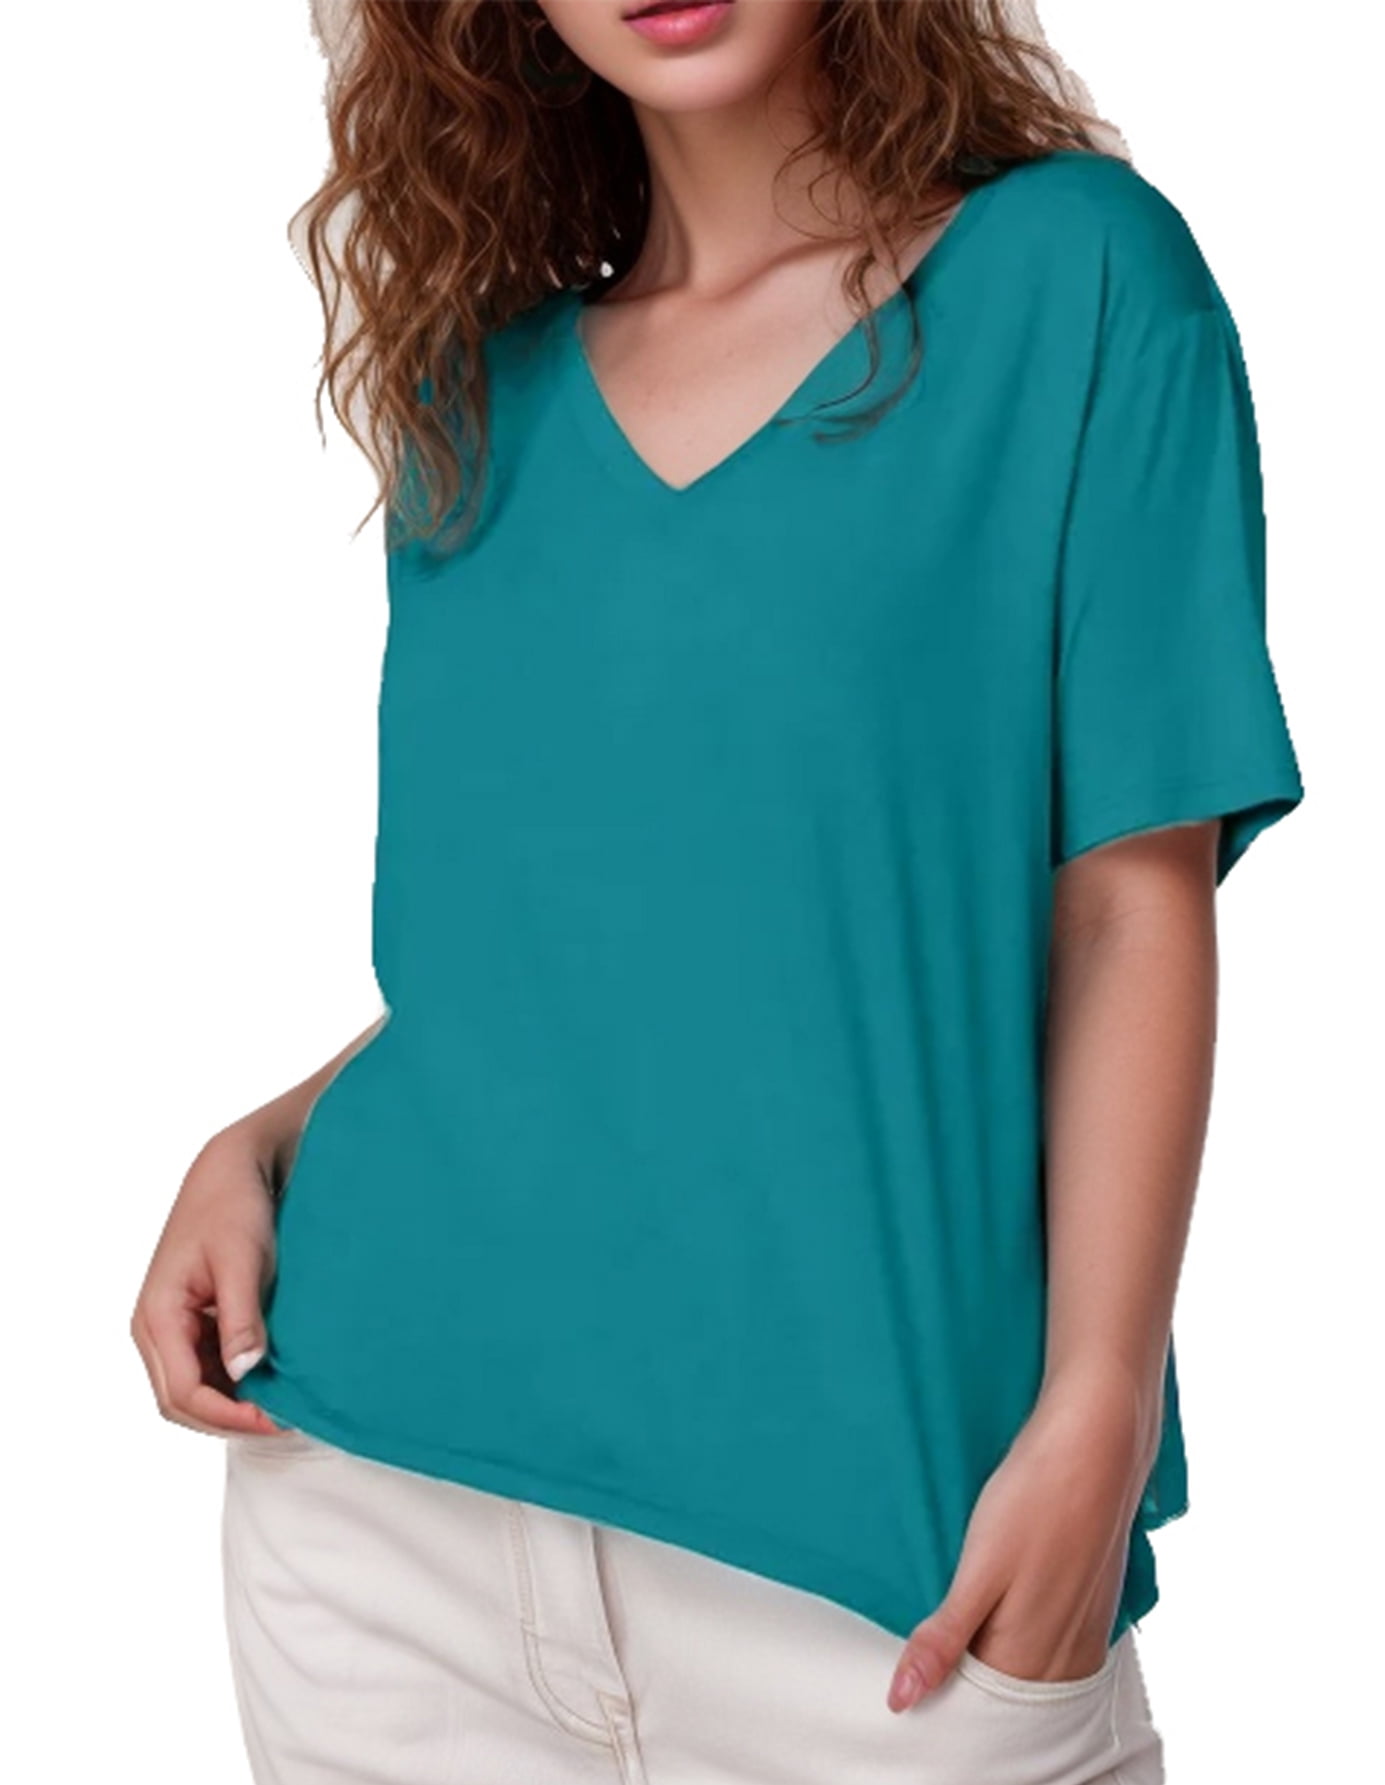 DreamFish Women's Plus Size Tops V Neck T Shirts Summer Short Sleeve ...